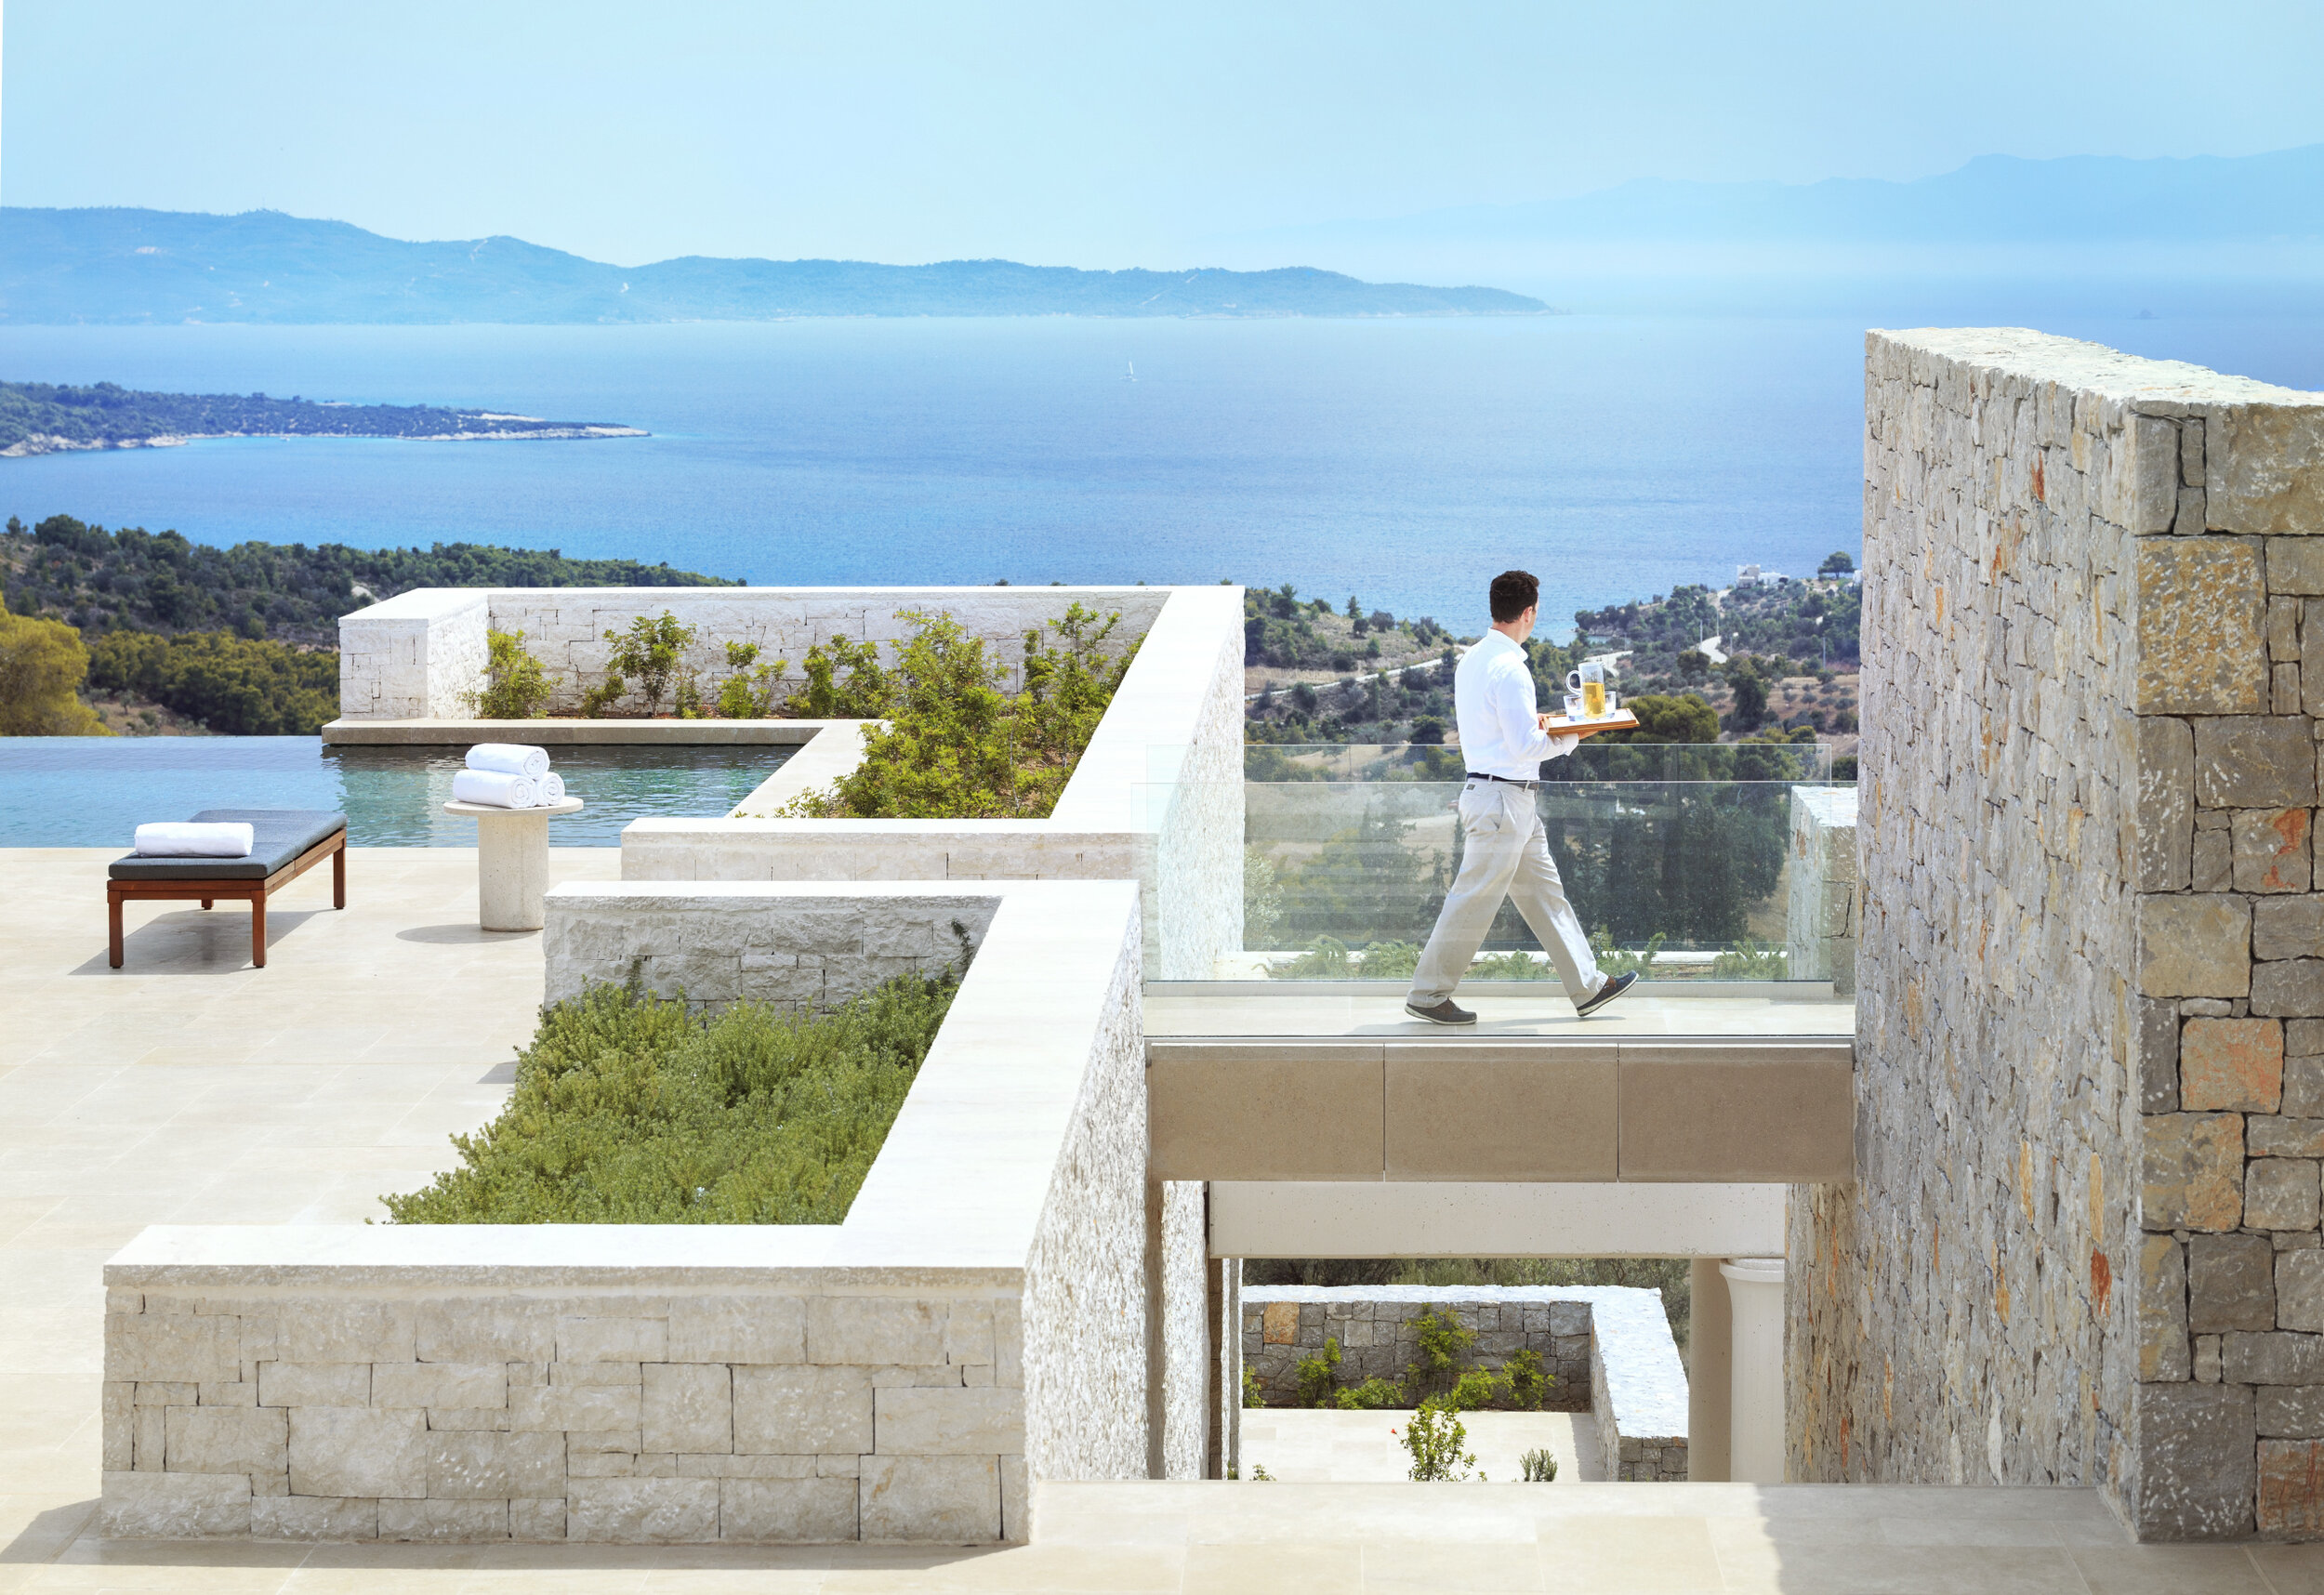 Amanzoe, Greece - Accommodation, Villas, Five bedroom villa, View, Service_High Res_6796.jpg